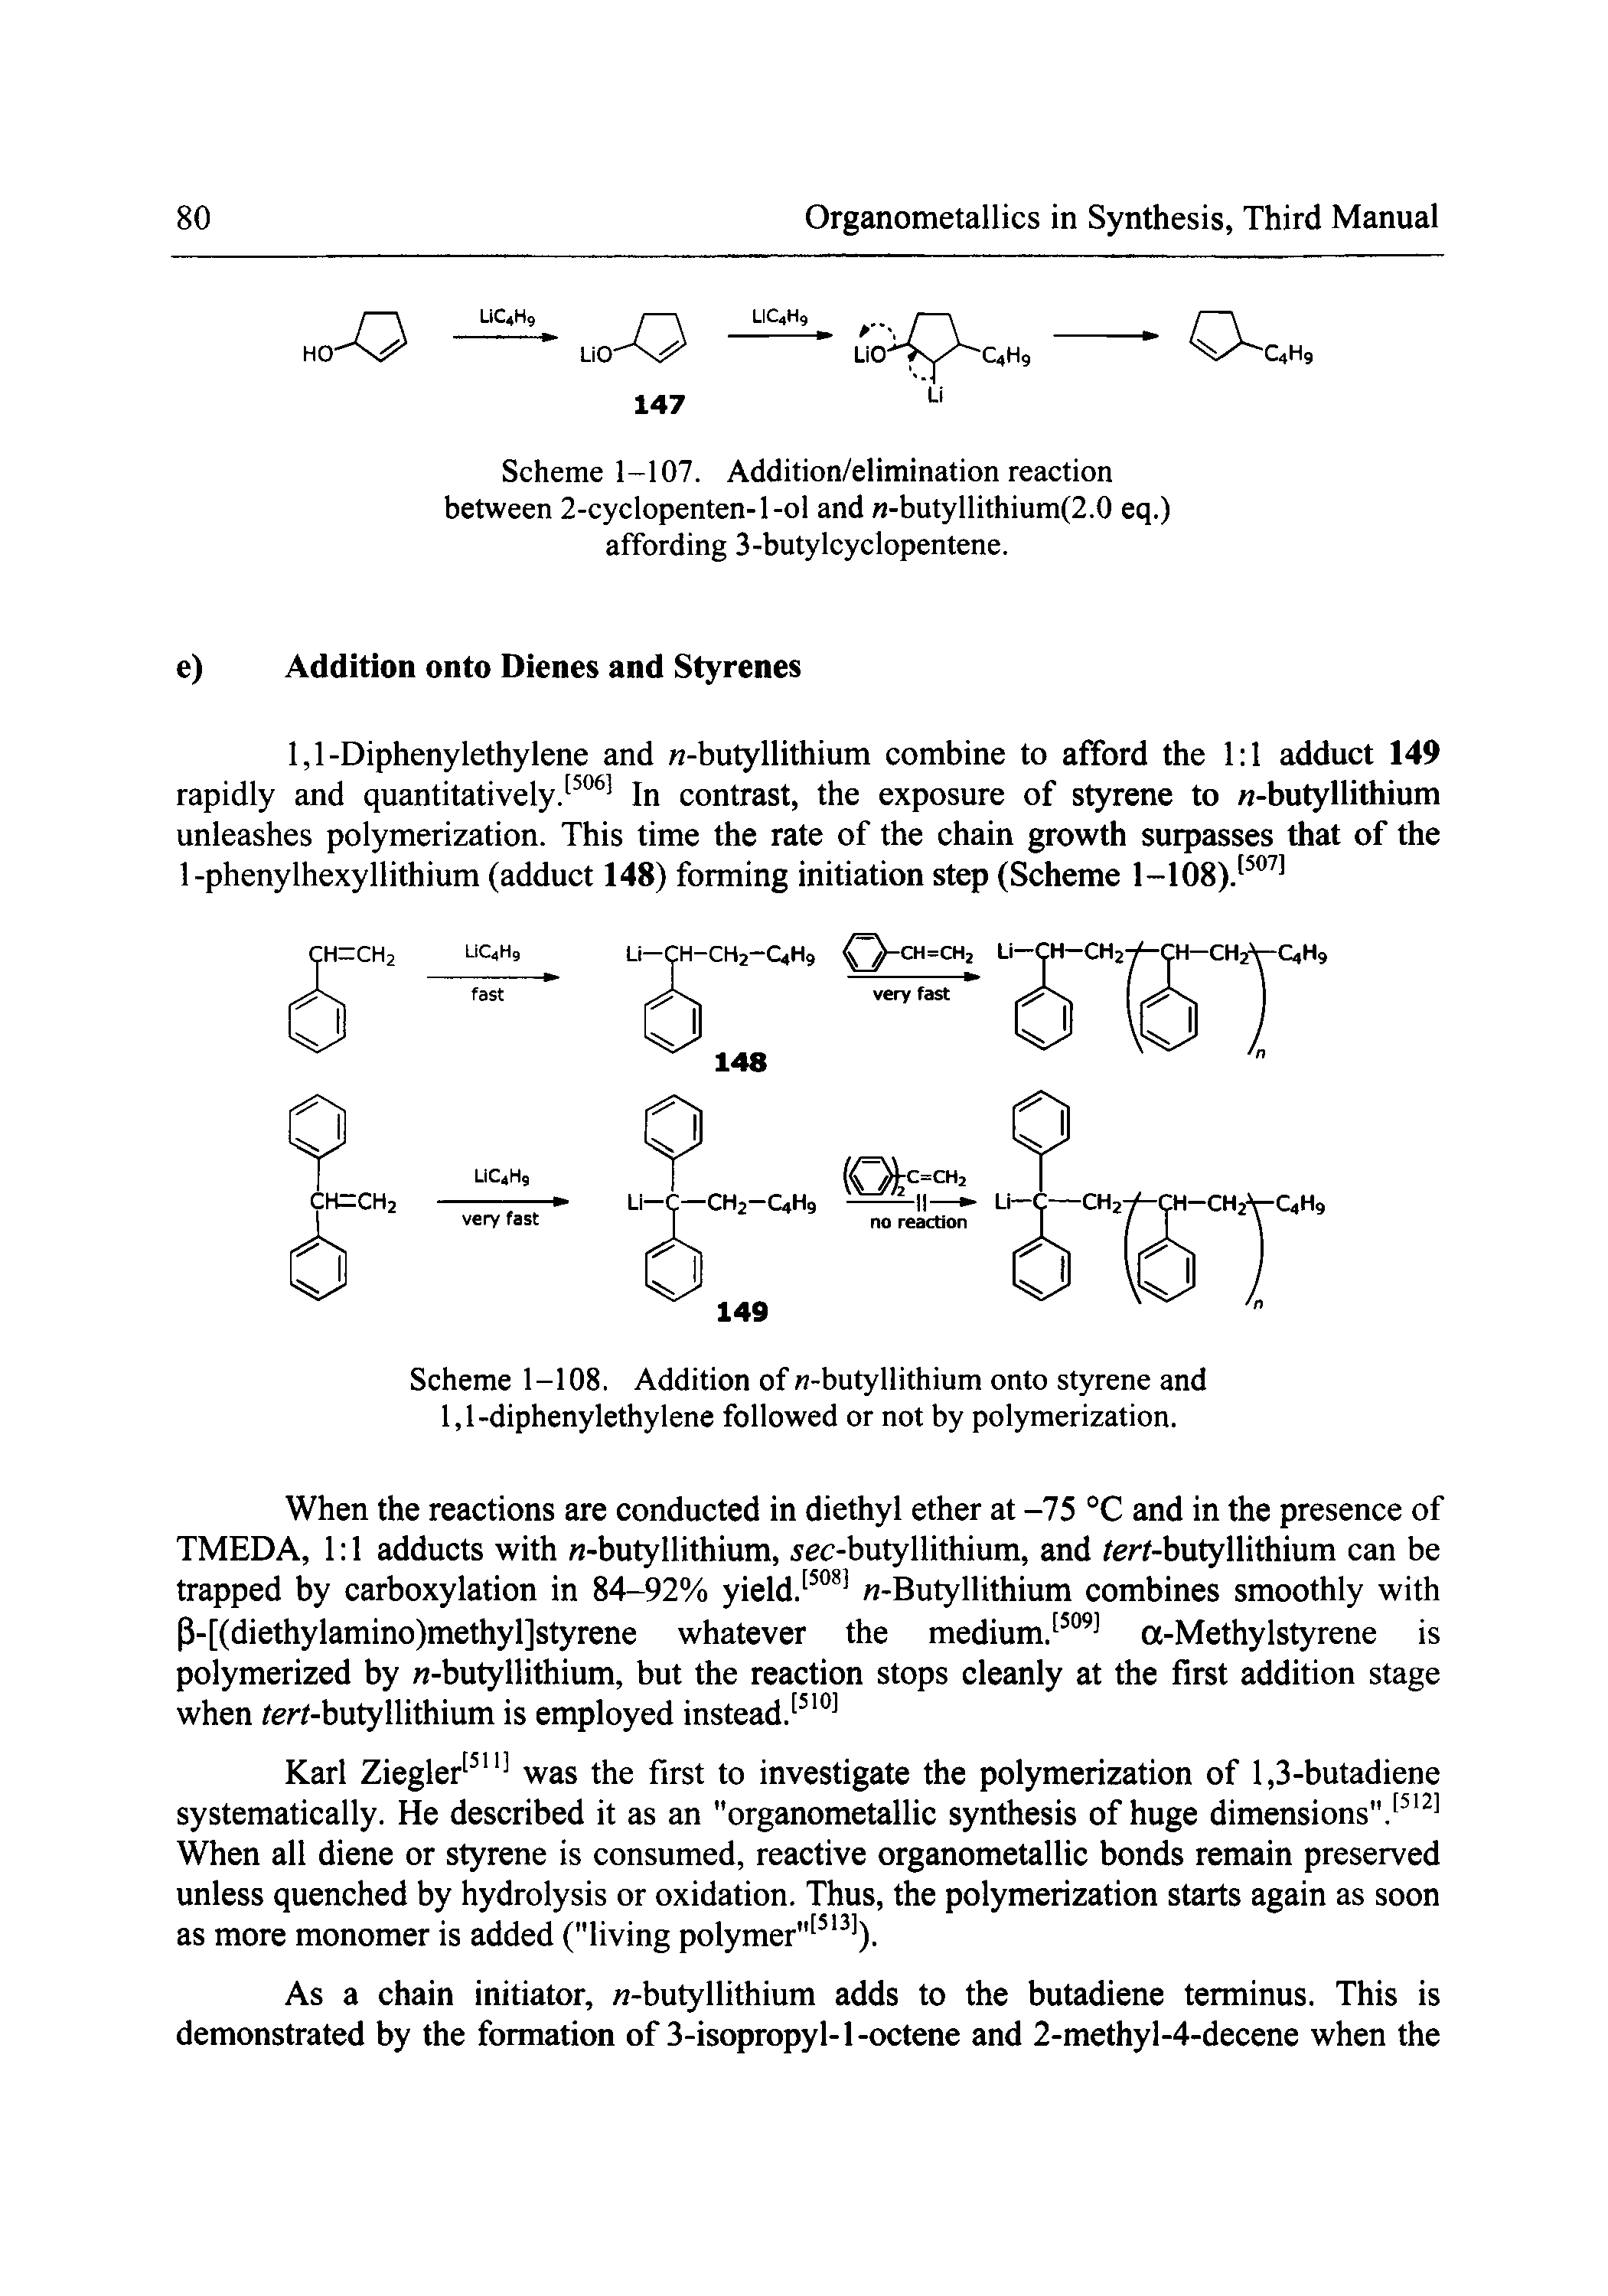 Scheme 1-108. Addition of n-butyllithium onto styrene and 1,1-diphenylethylene followed or not by polymerization.